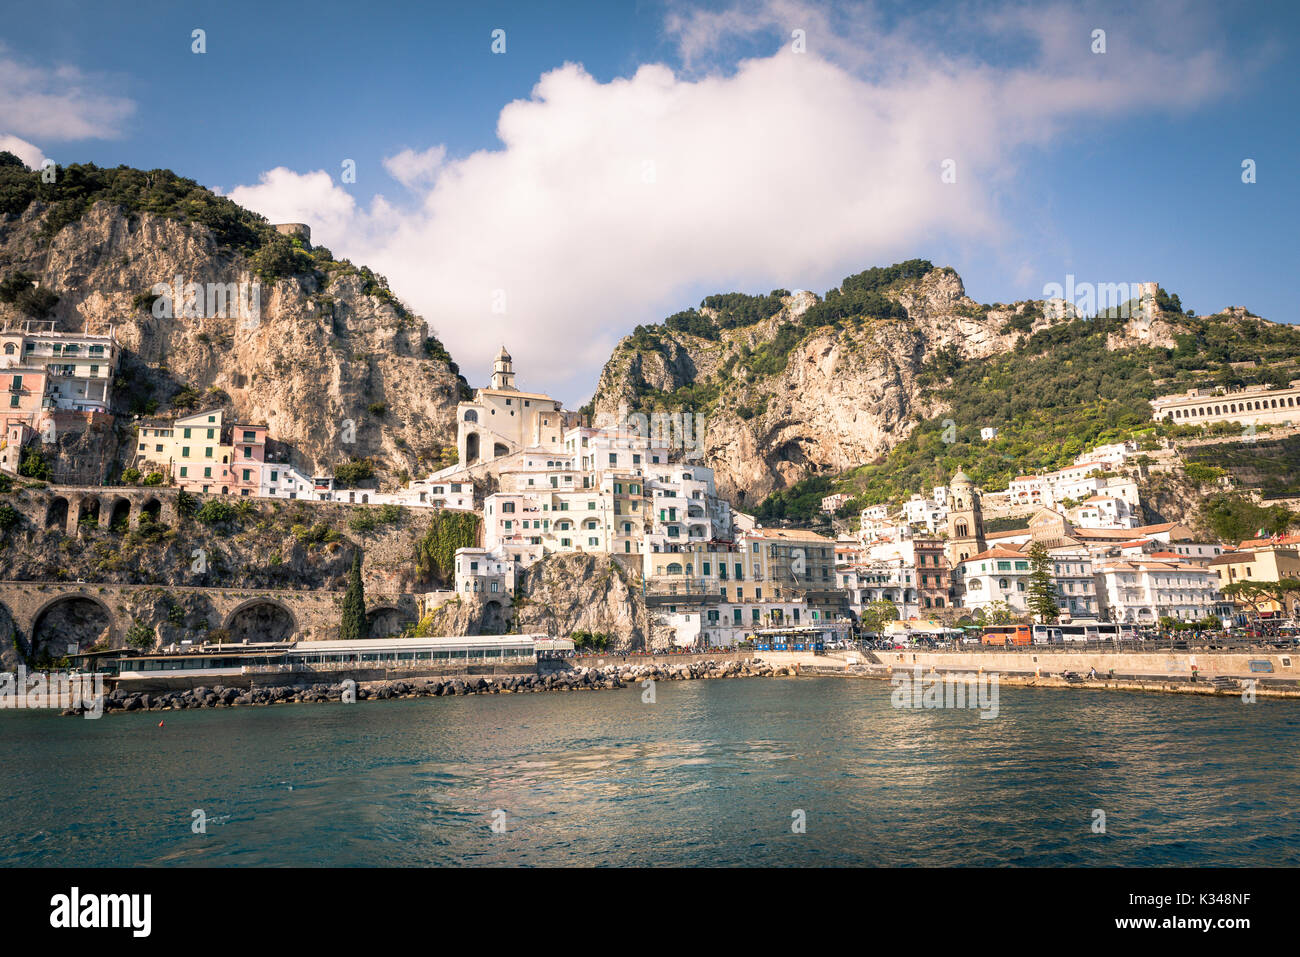 Italia Amalfi Coast vista desde el agua Foto de stock